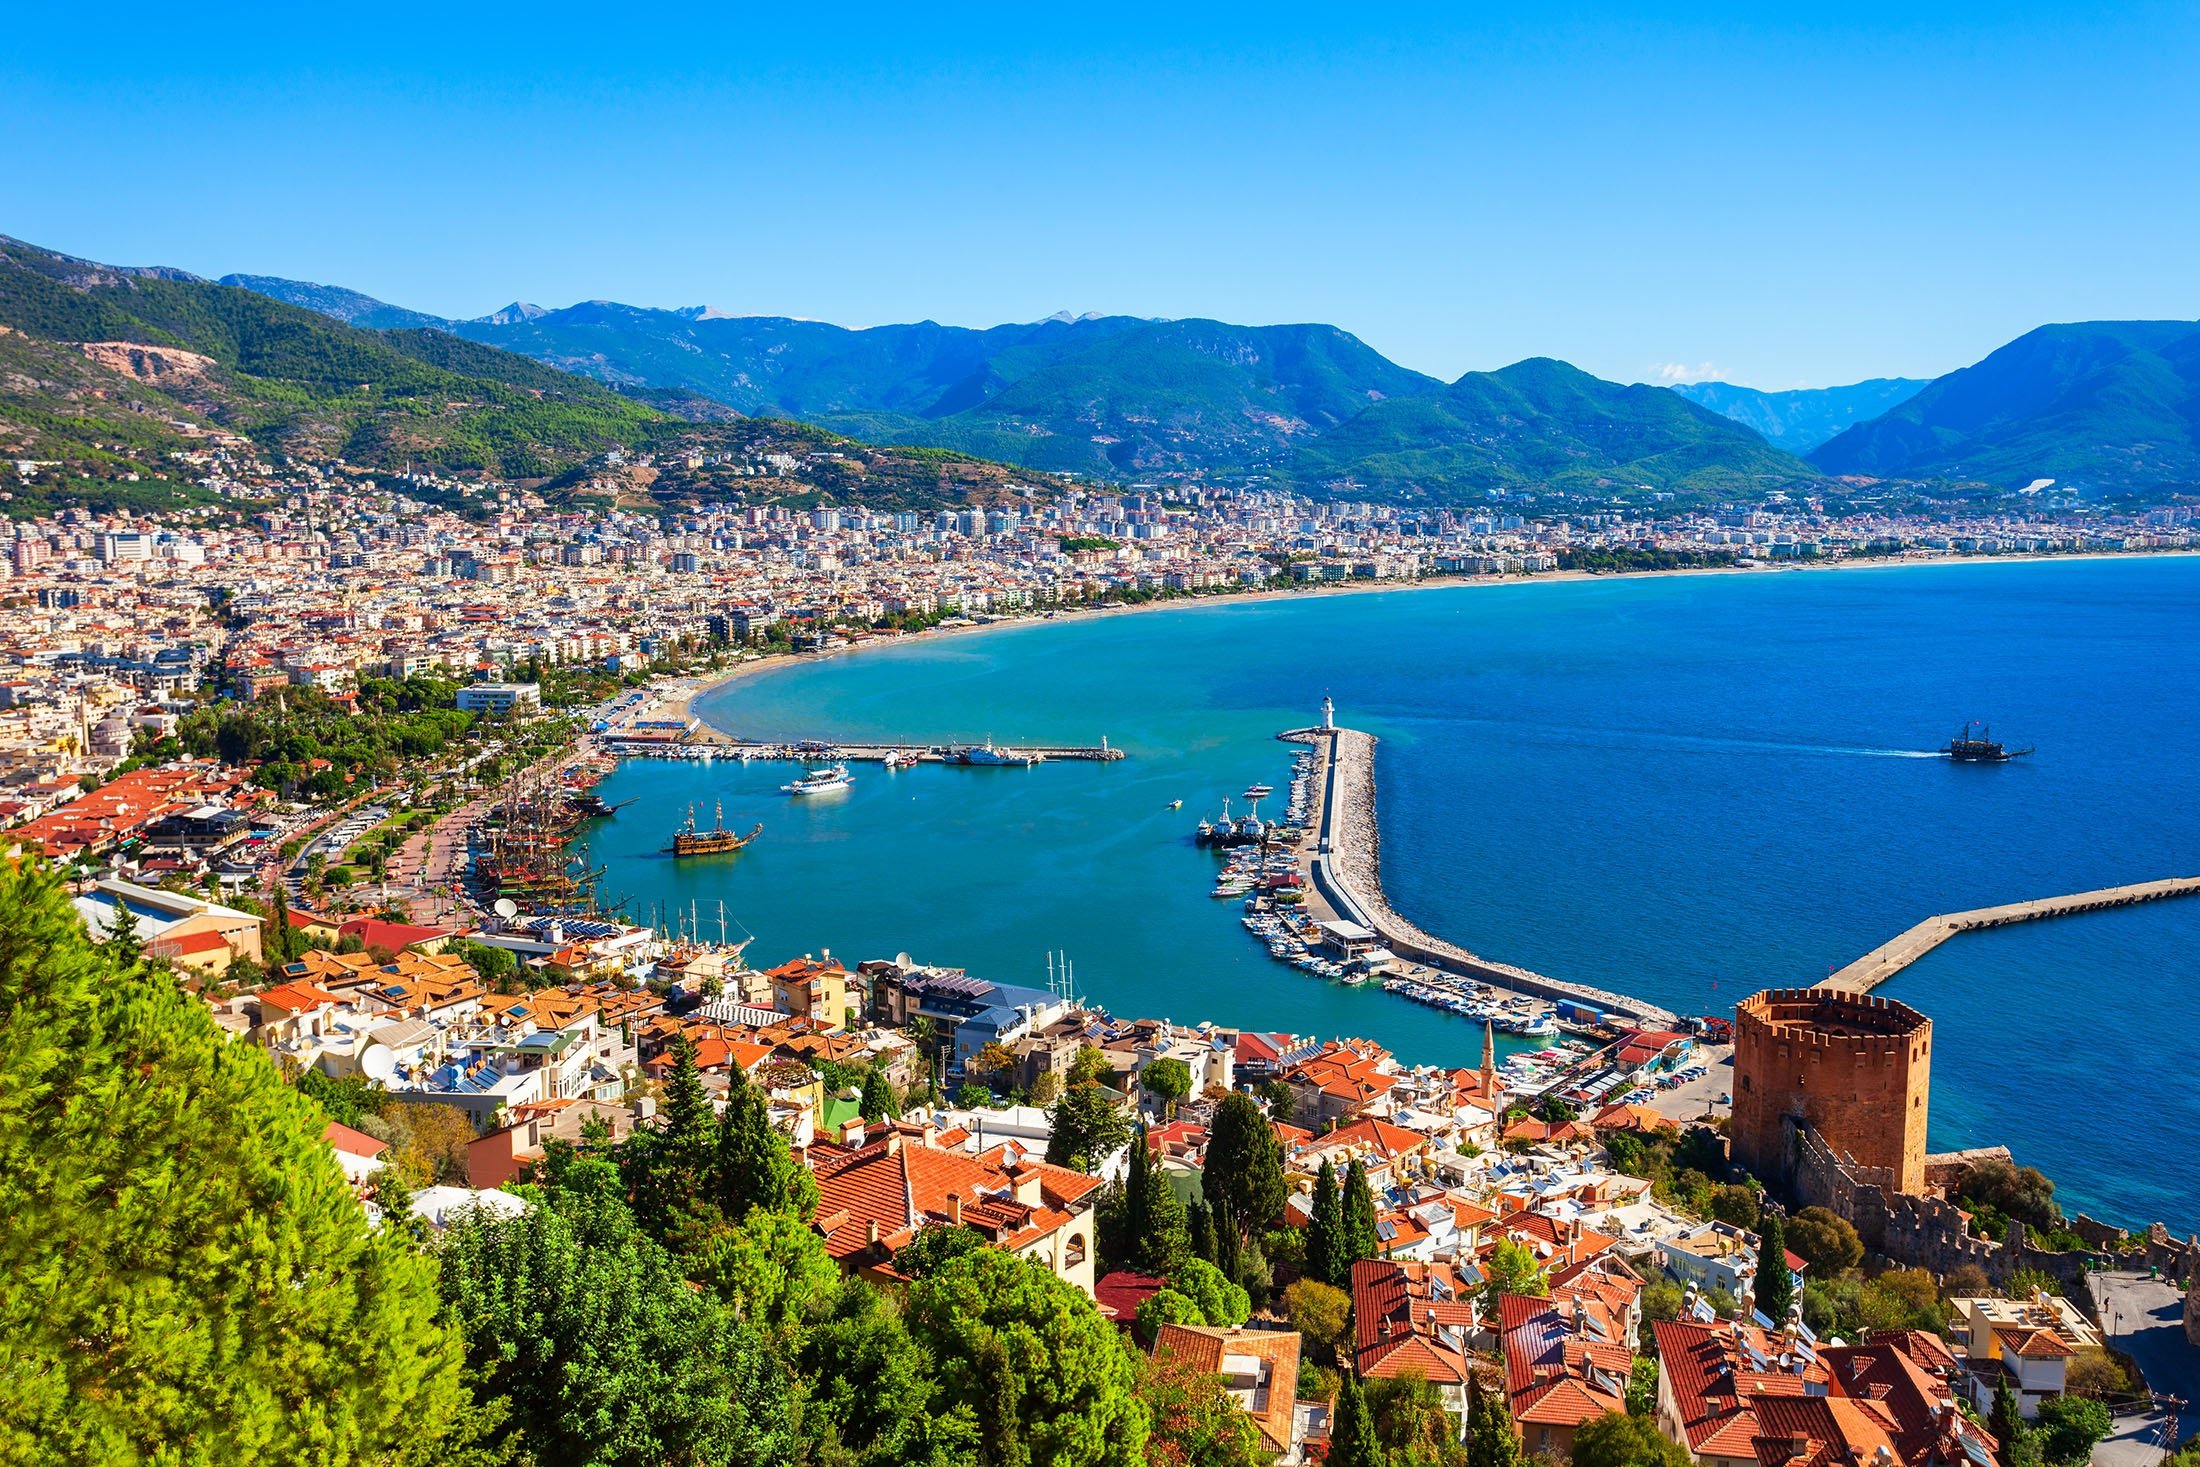 The expansive resort city of Antalya lies east on the Mediterranean coast. (Shutterstock Photo)